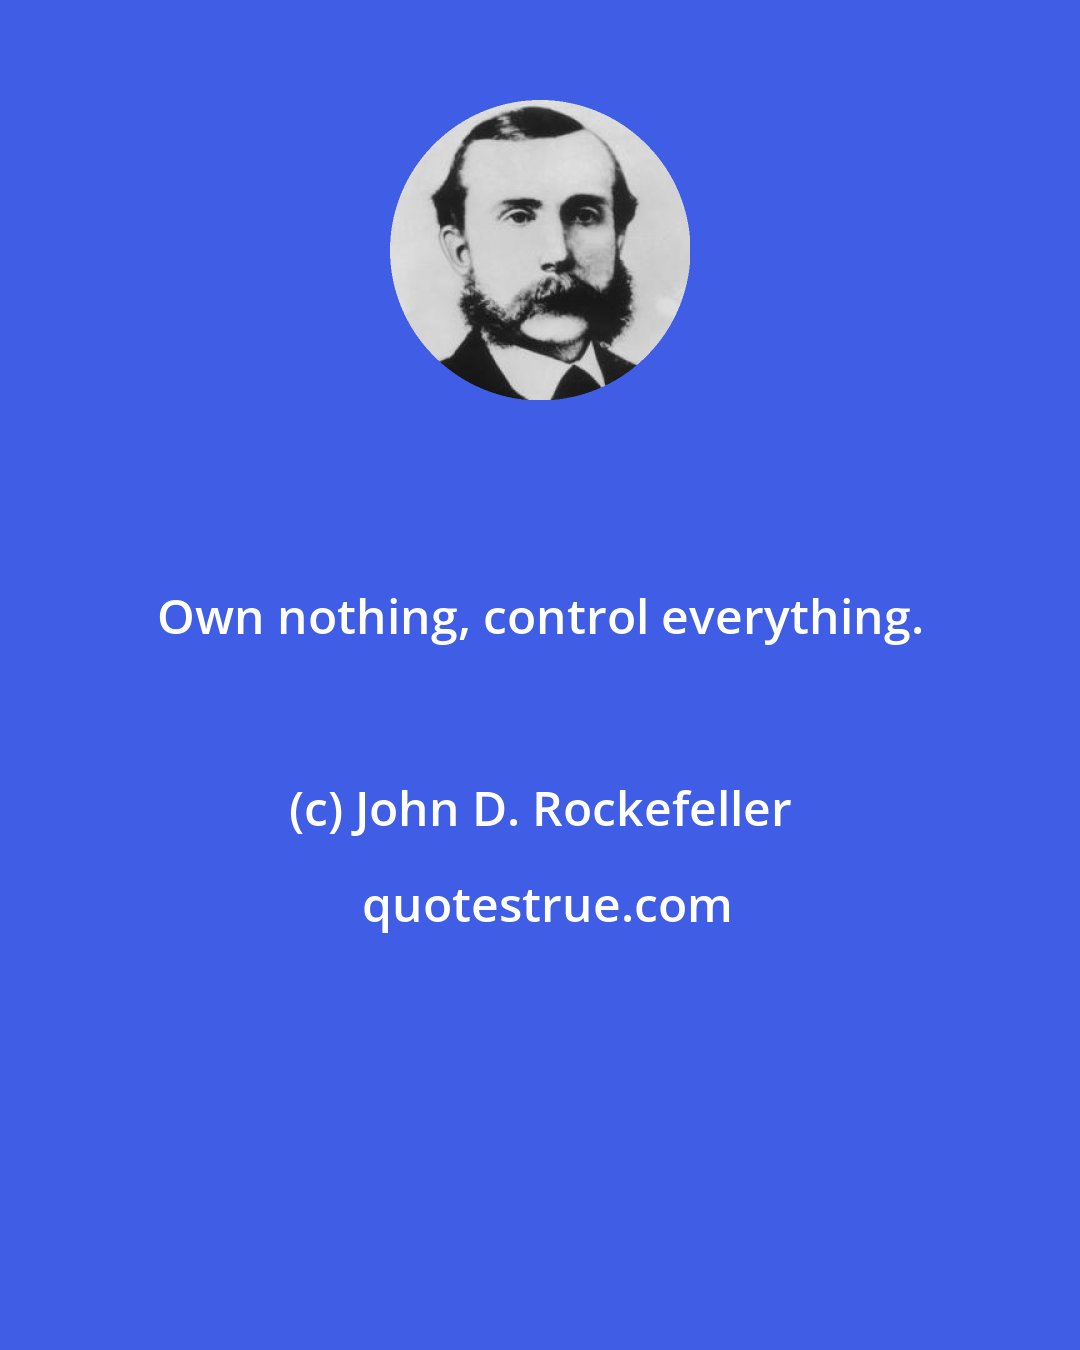 John D. Rockefeller: Own nothing, control everything.